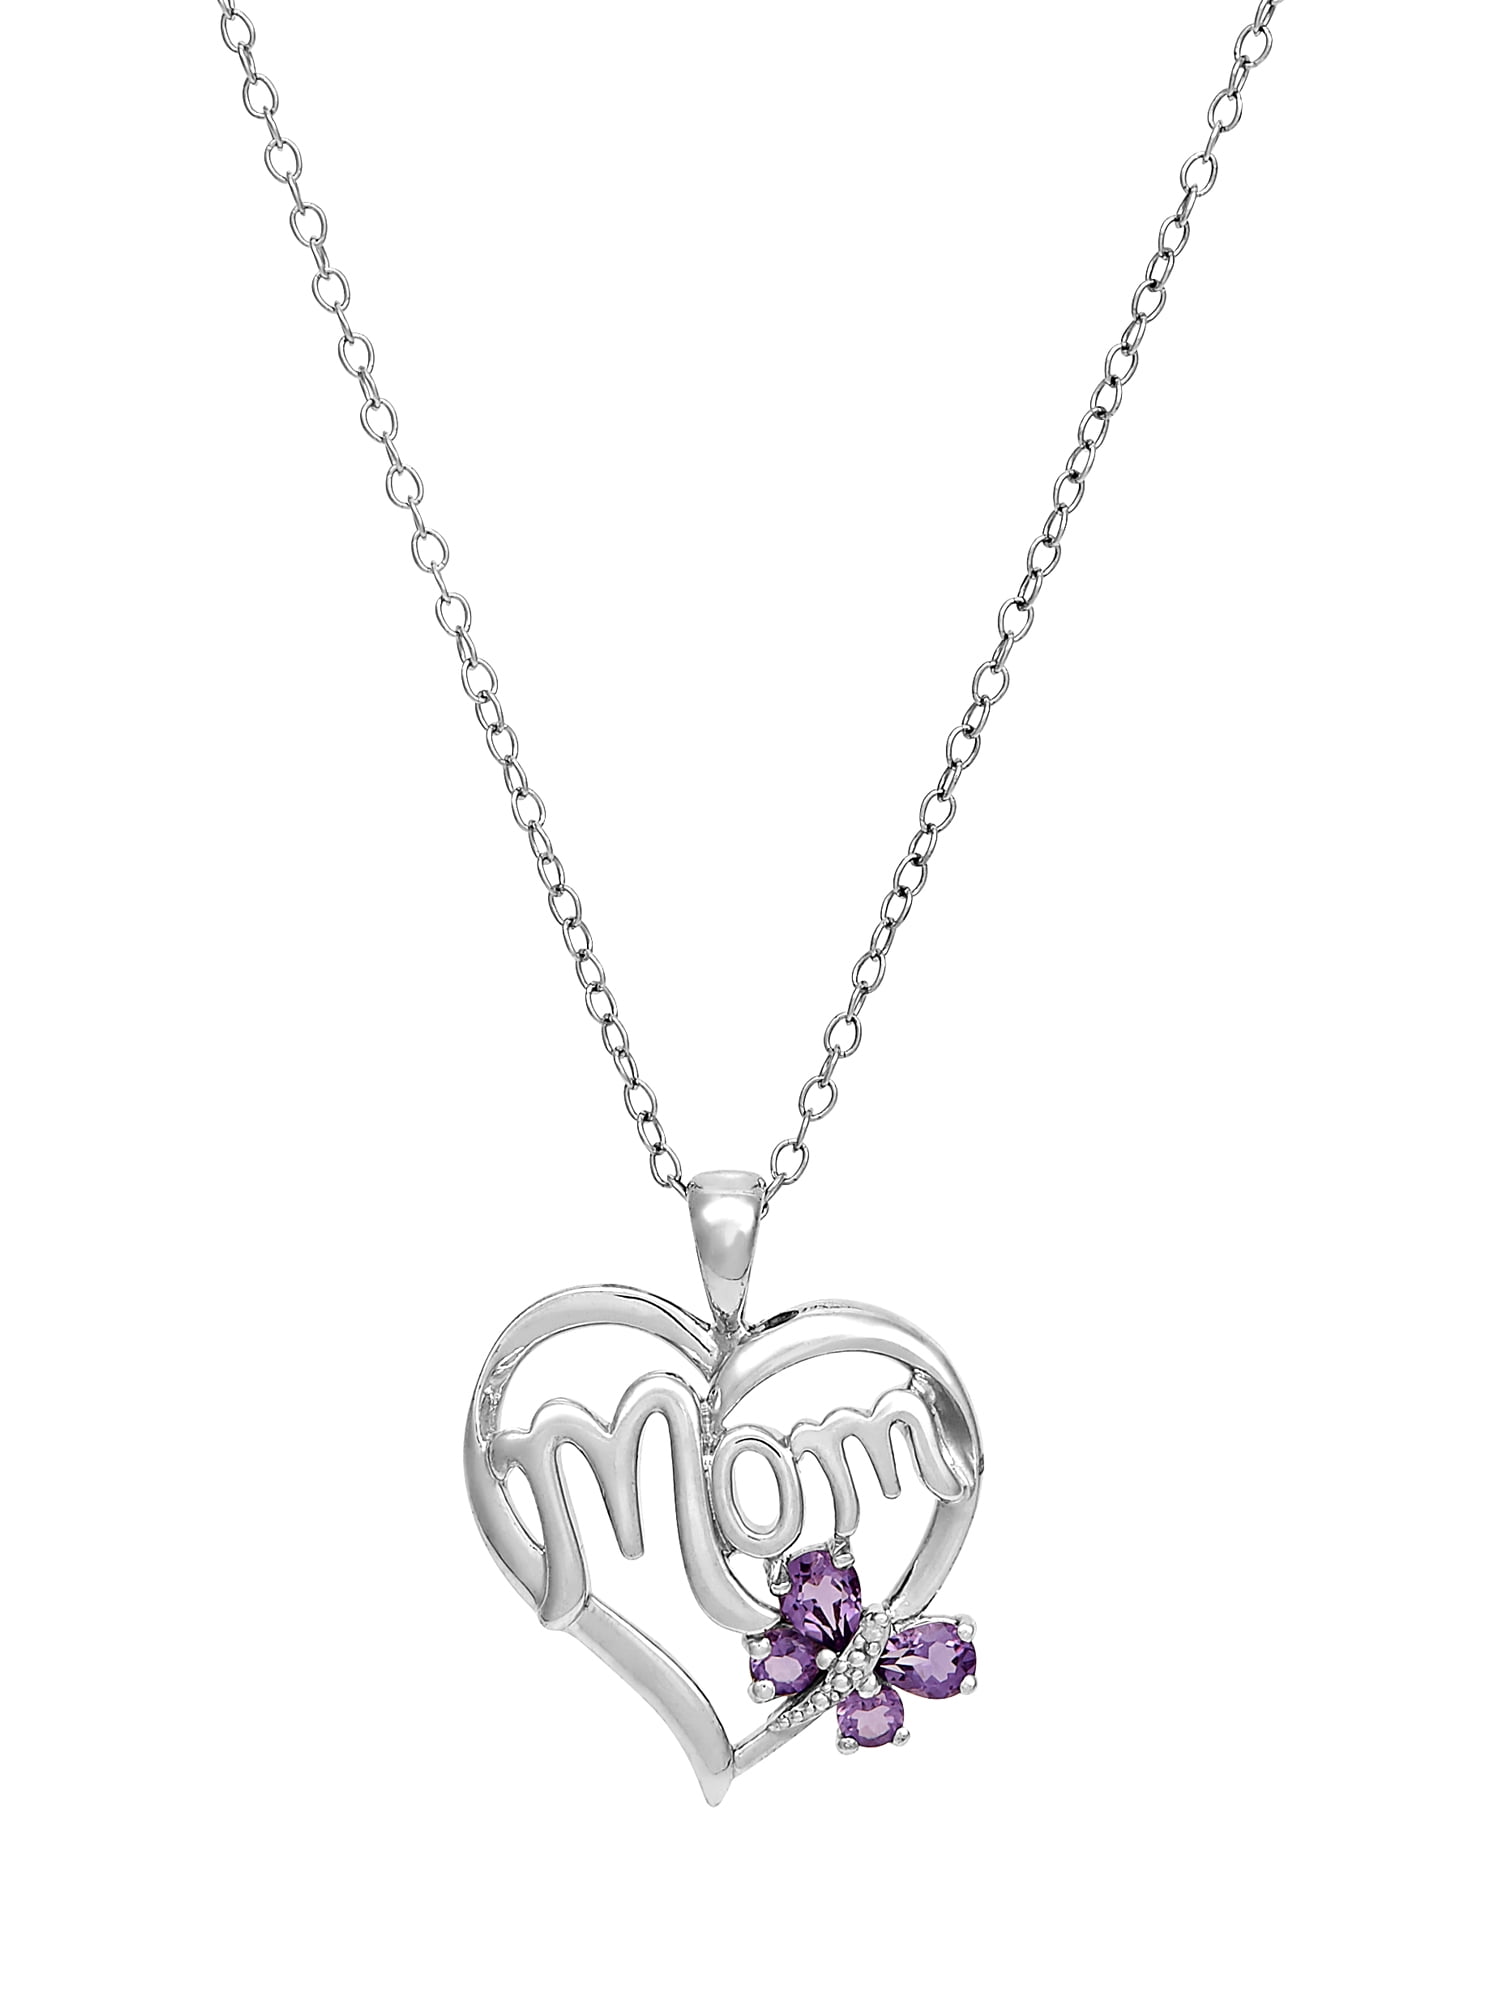 Dazzling Rose Flower Heart Pendant Necklace Gemstones 14k Black Gold Over .925 Sterling Silver for Womens